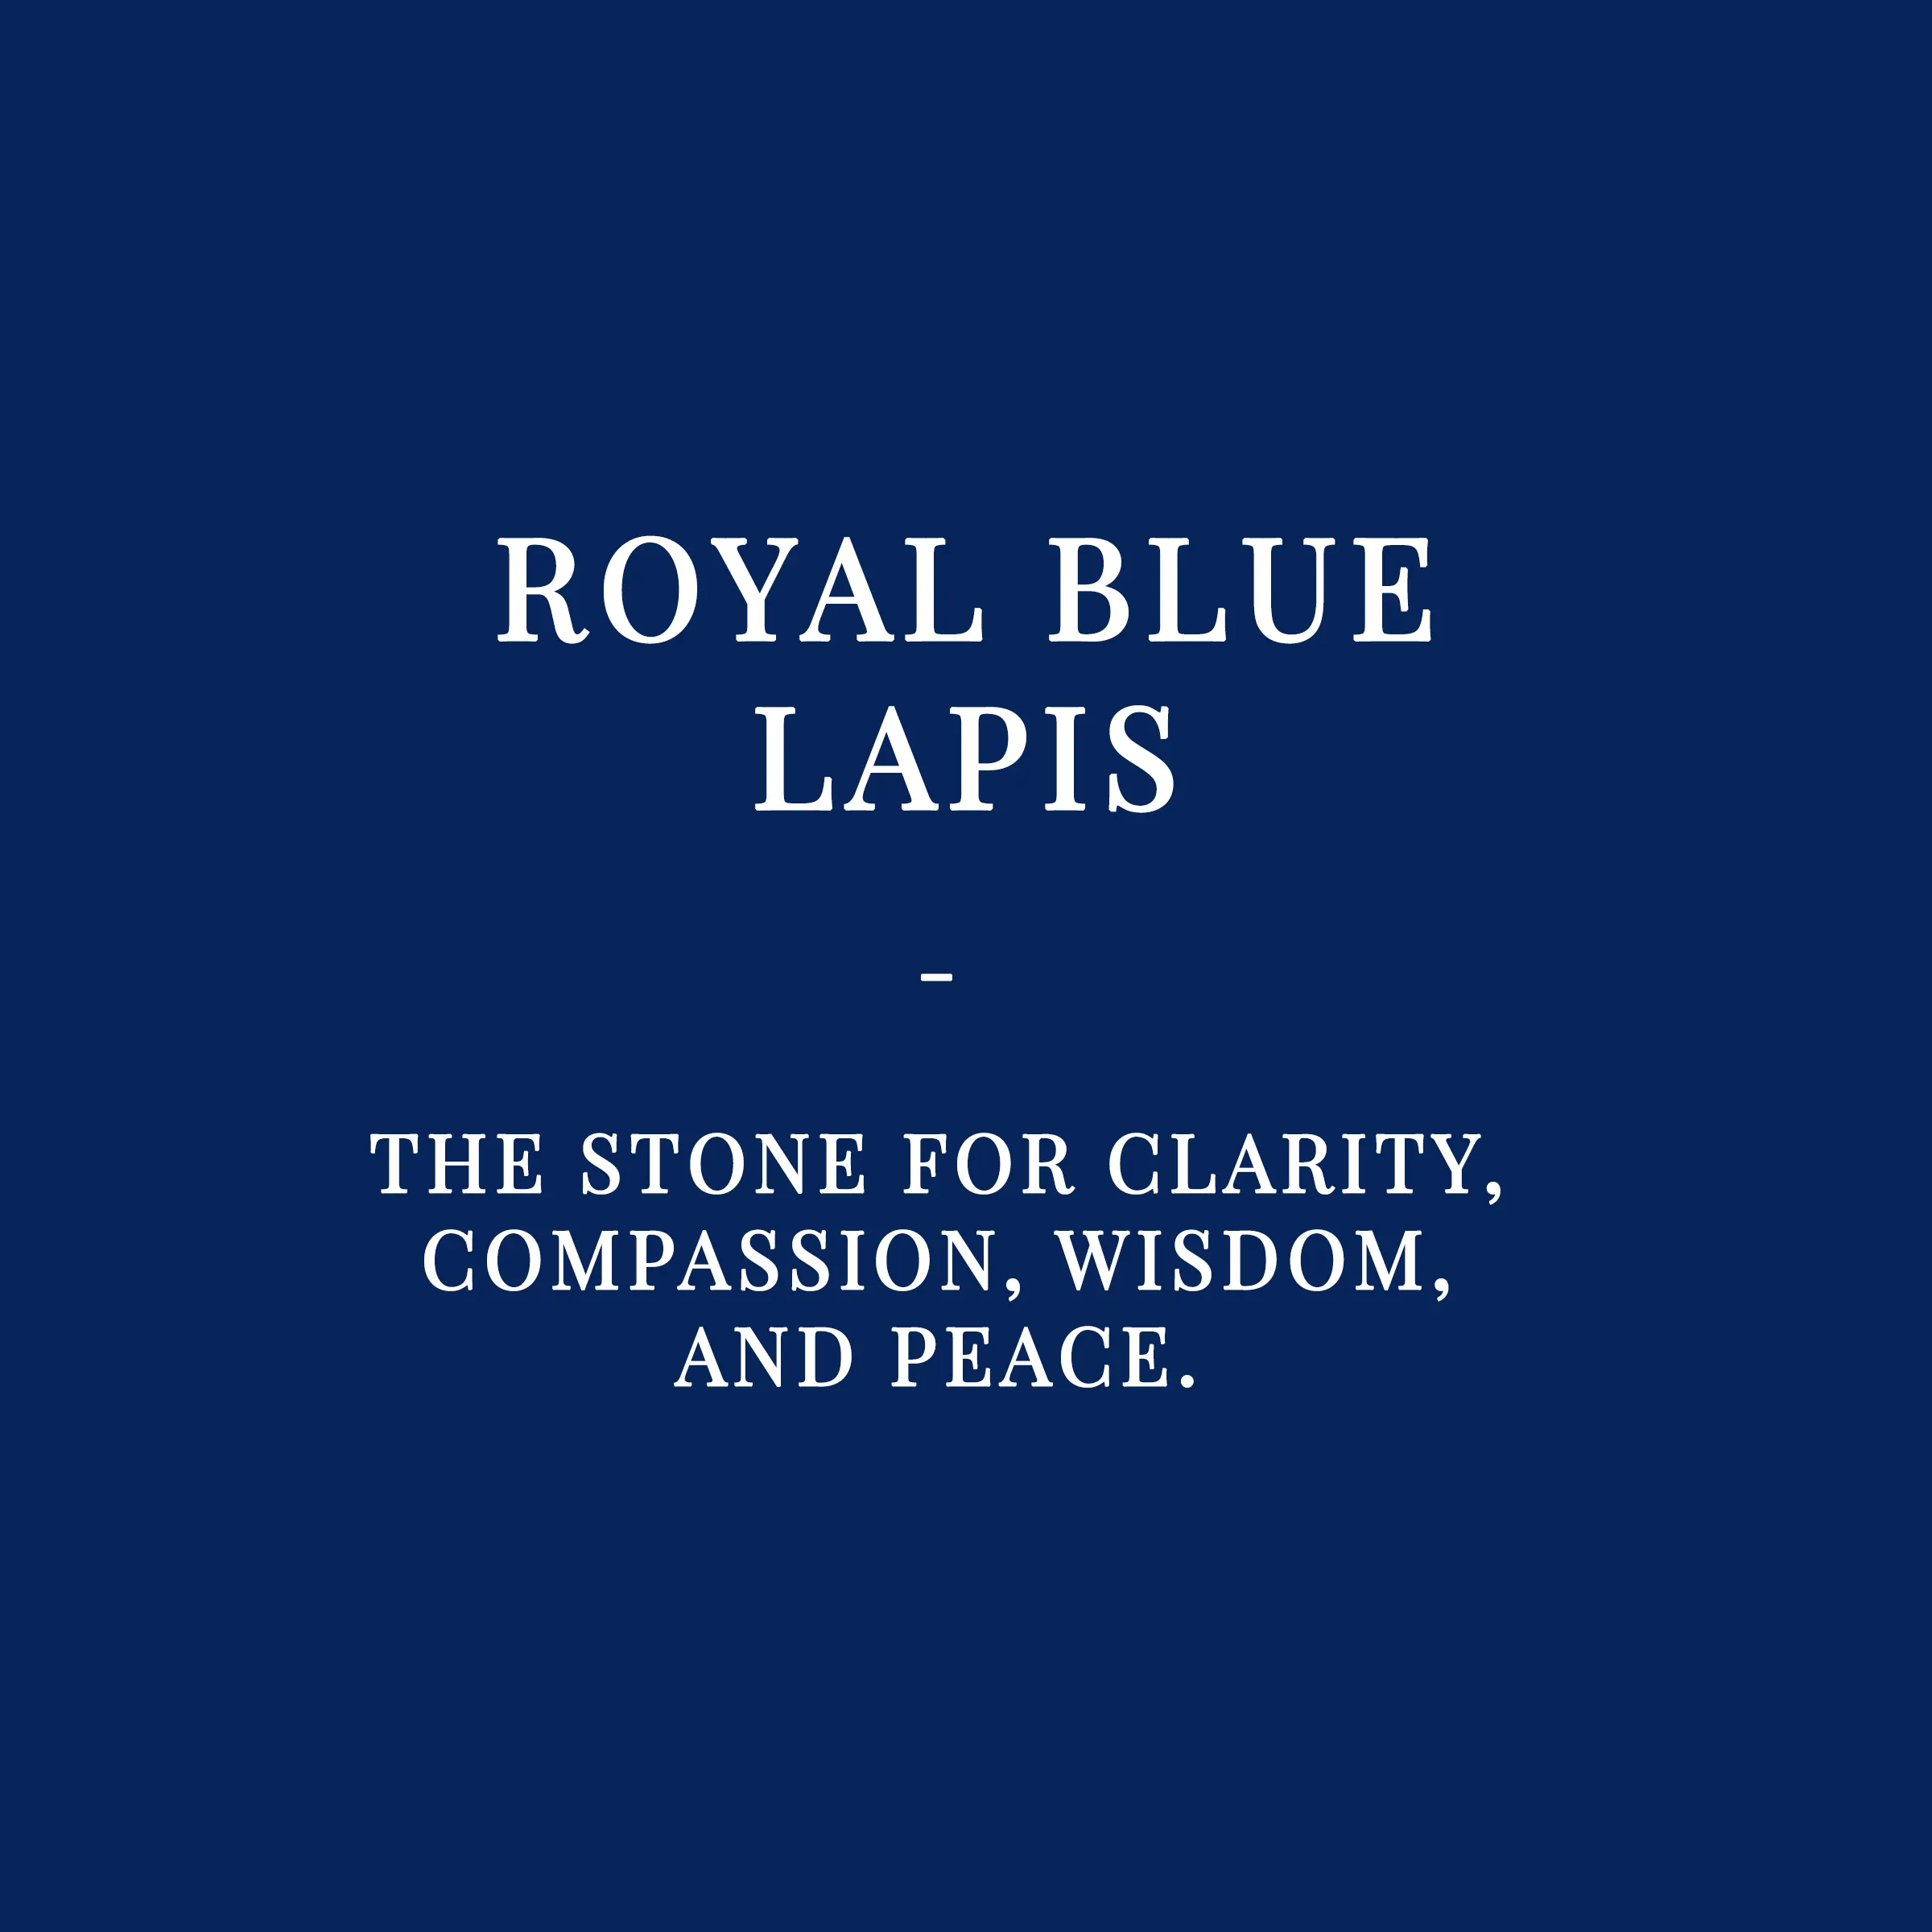 Royal Blue Lapis